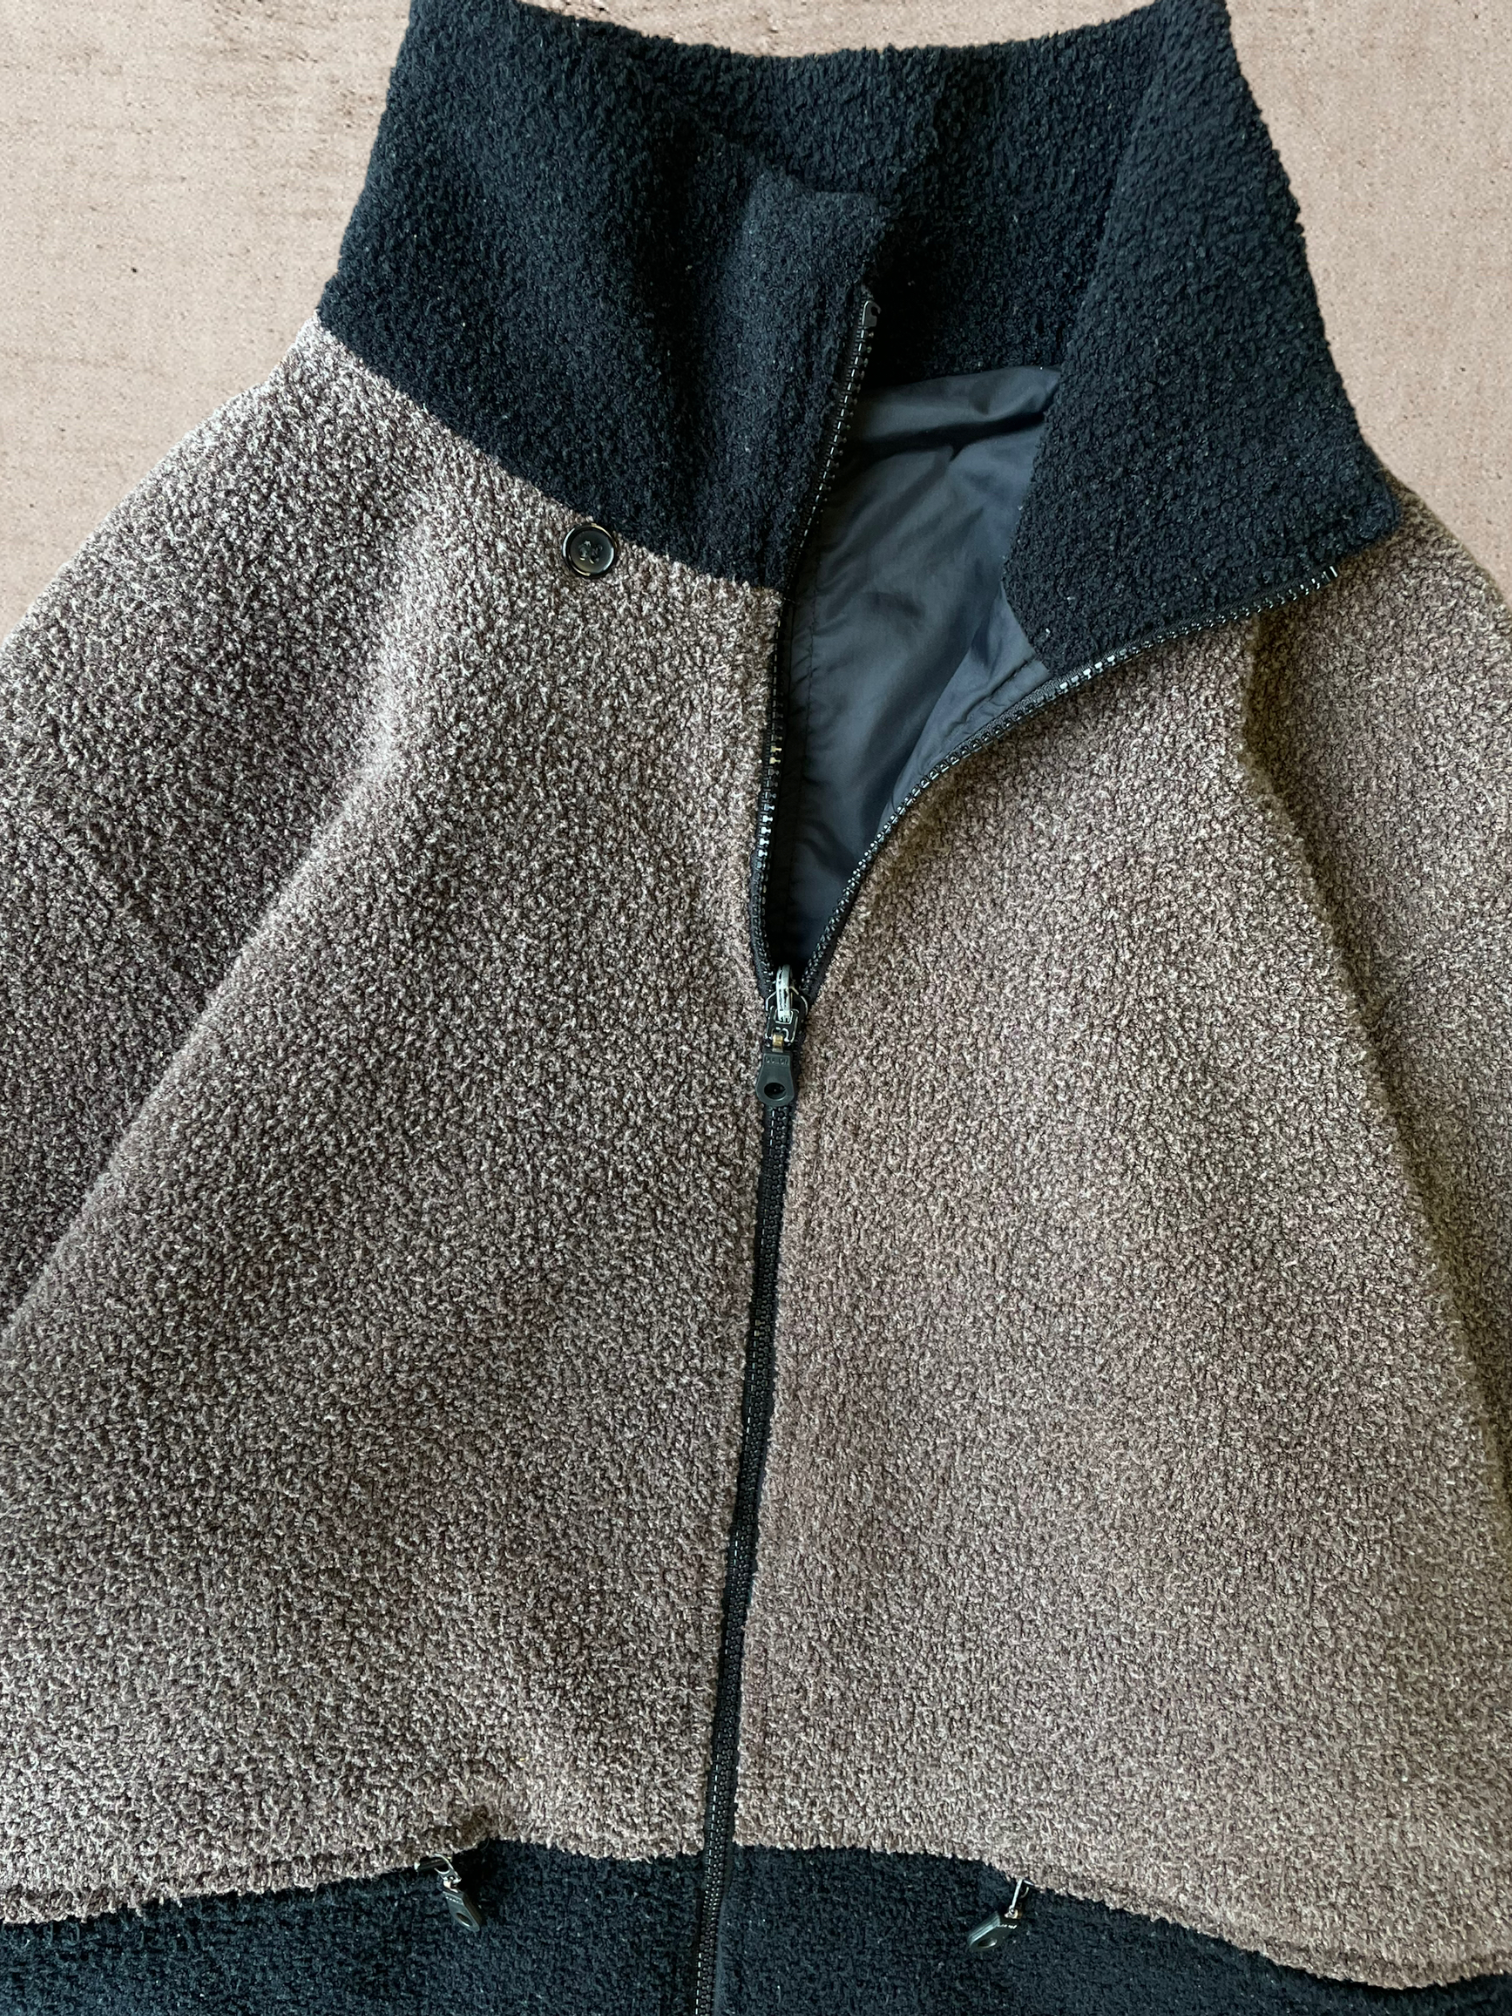 90s Reversible Fleece Jacket - XL